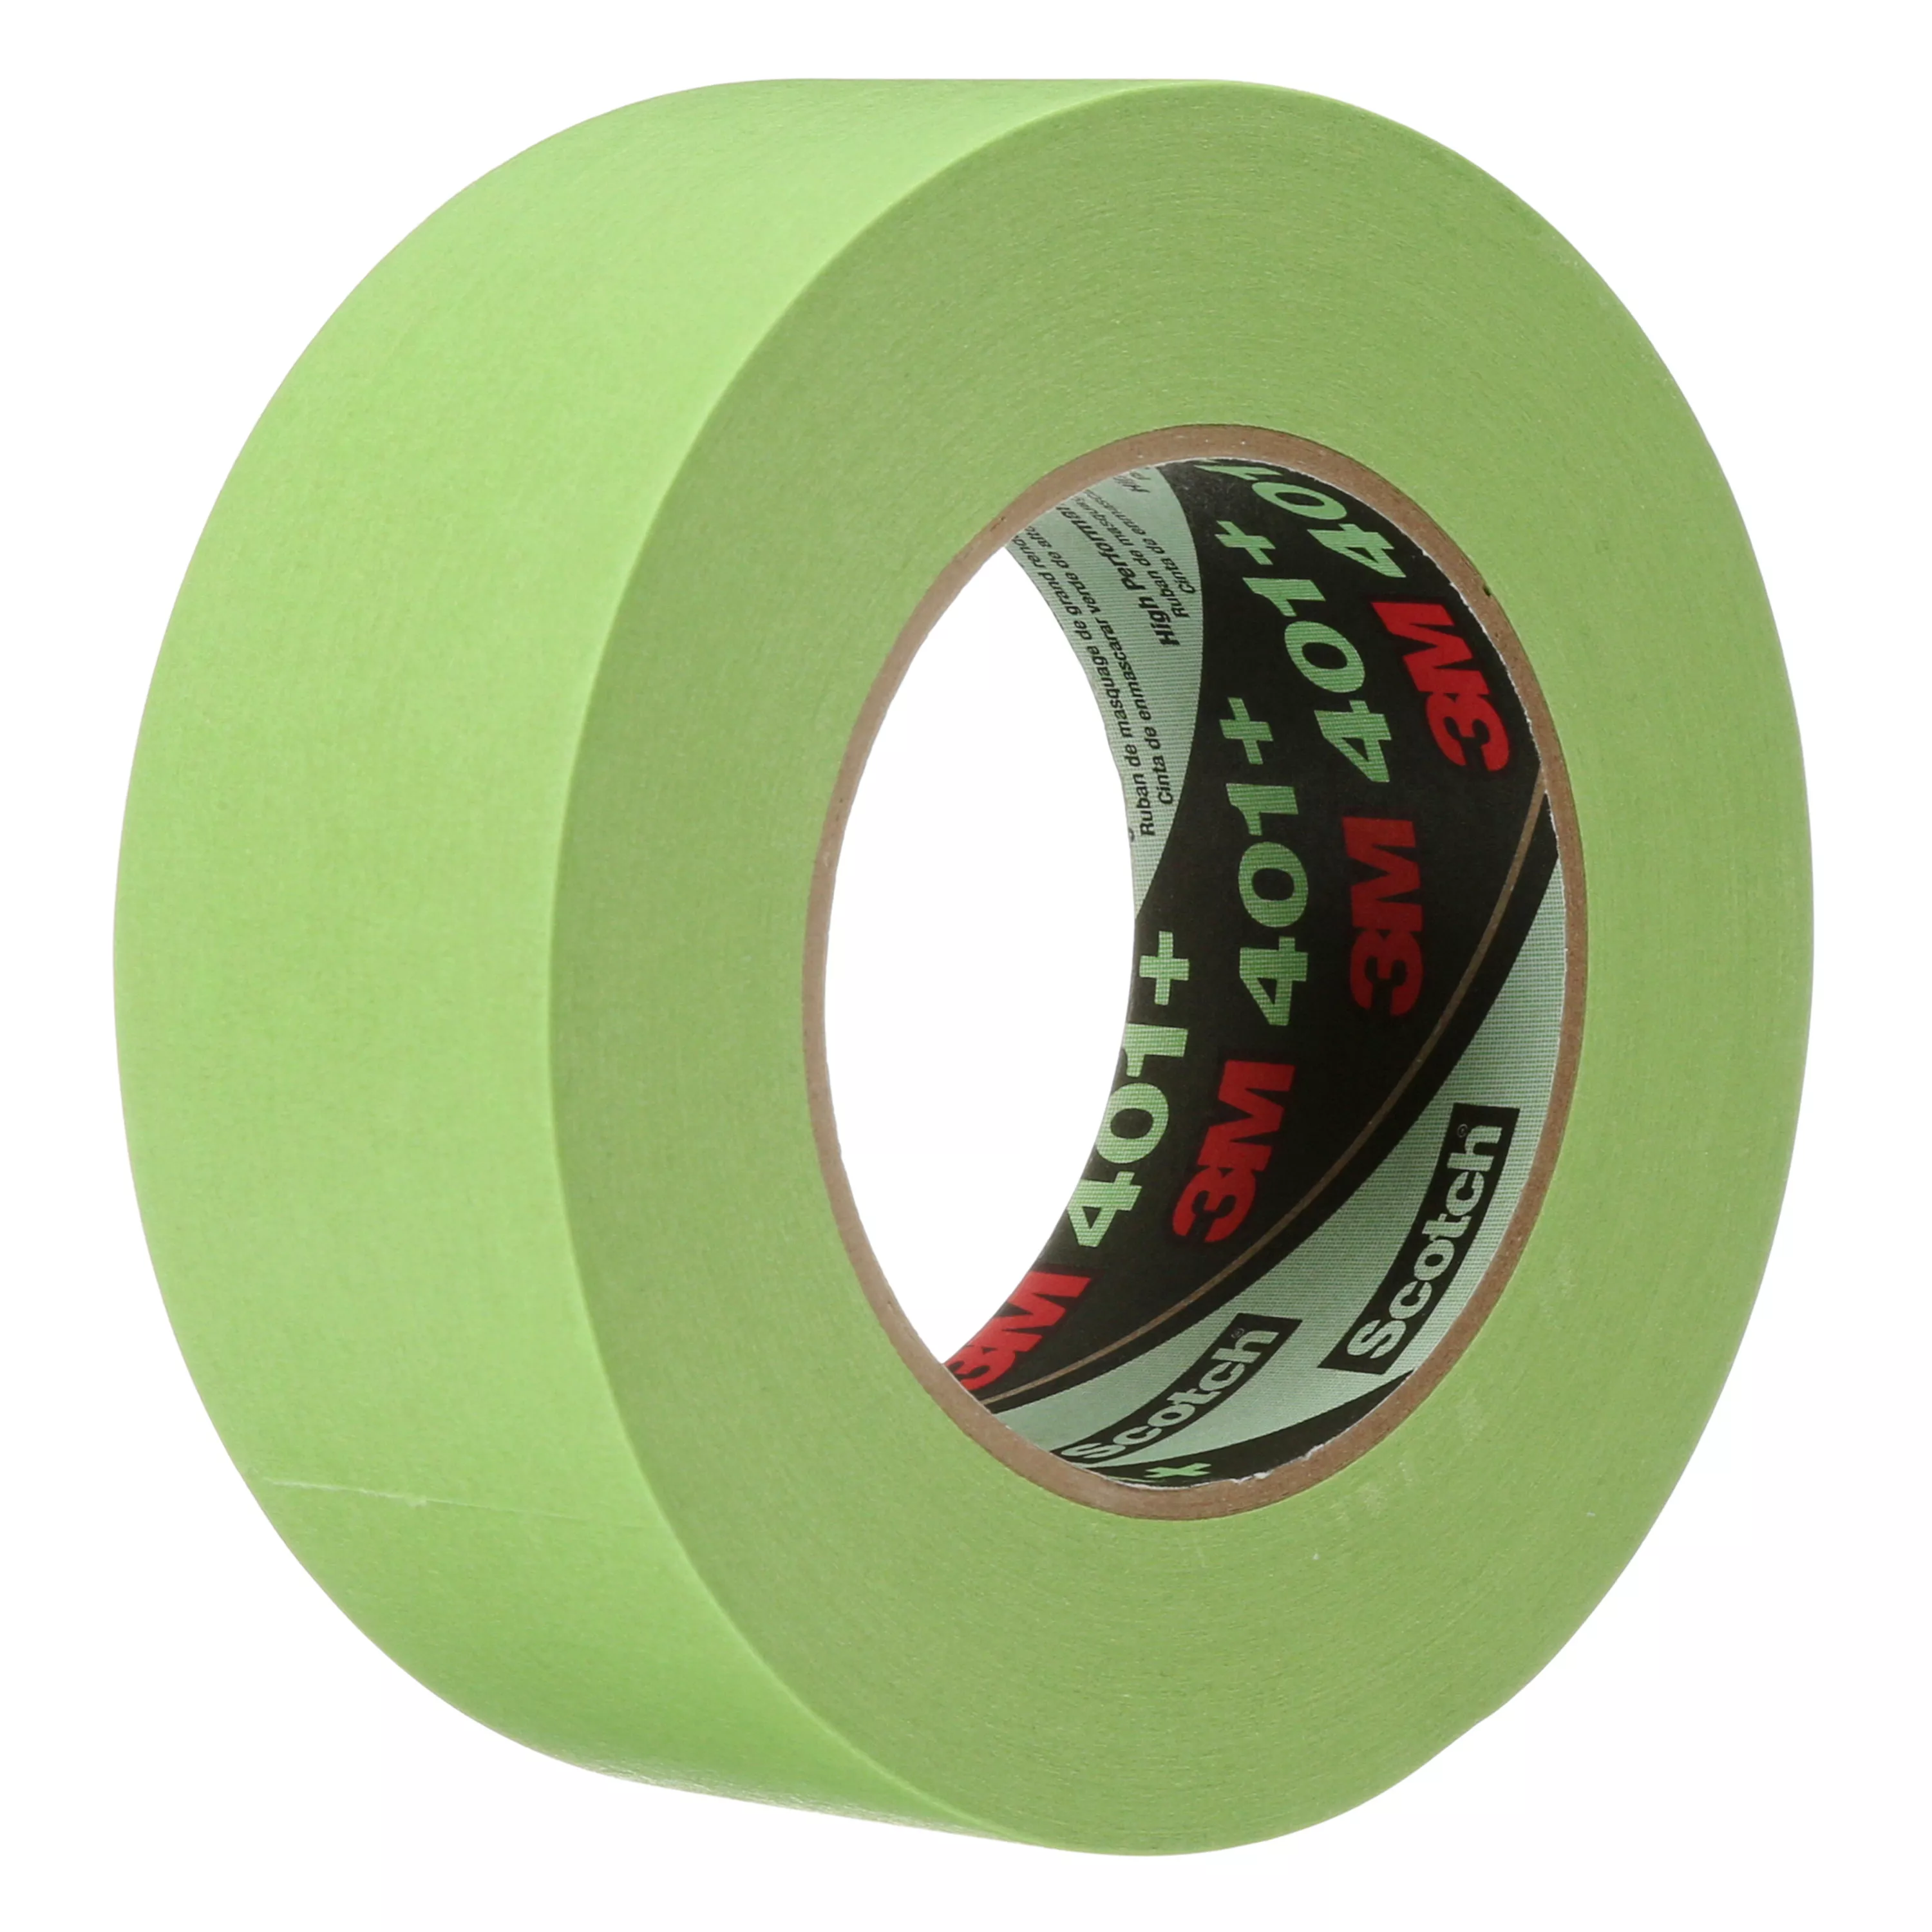 3M™ High Performance Green Masking Tape 401+, 48 mm x 55 m 6.7 mil, 12
Roll/Case